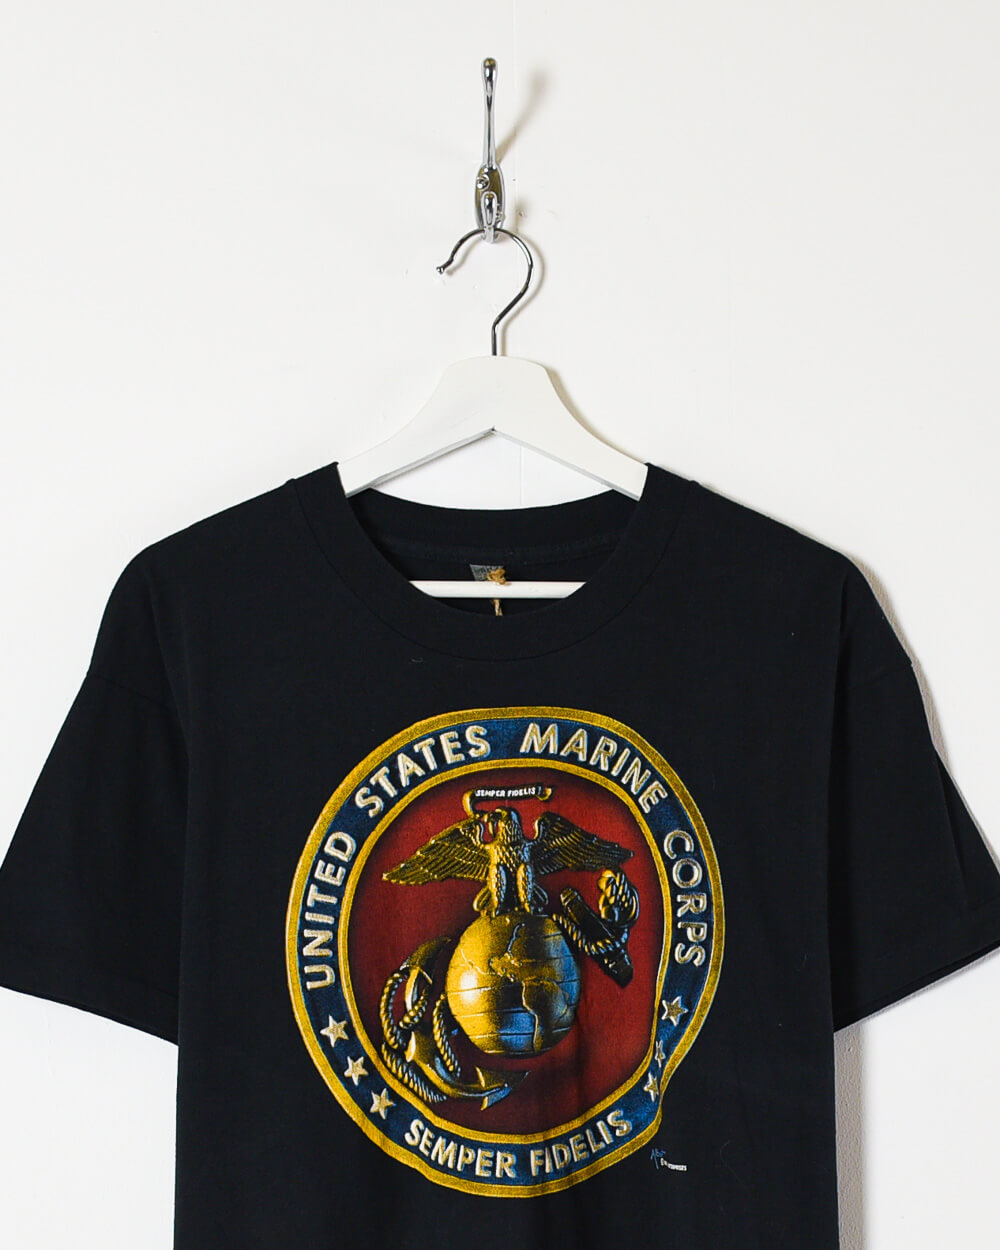 Black Semper Fidelis United States Marine Corps T-Shirt - Small